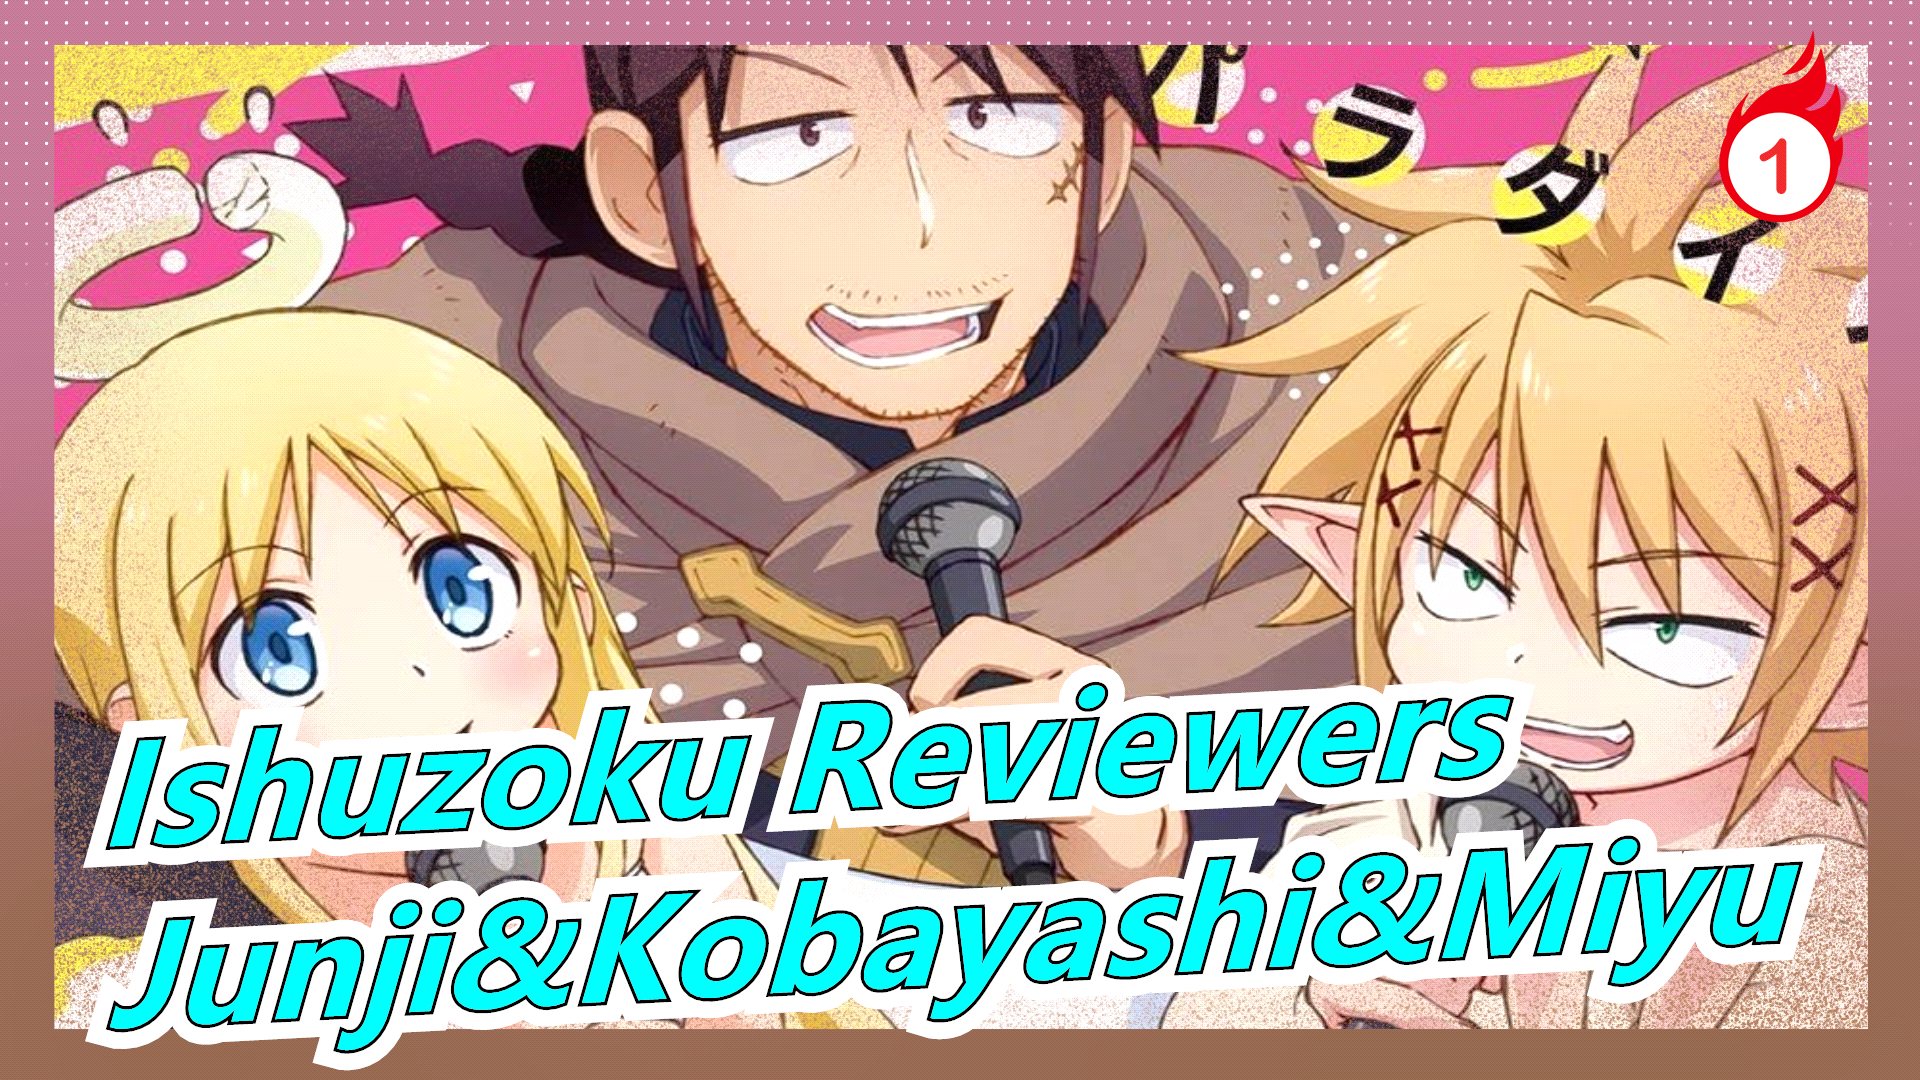 Ishuzoku reviewers compilation